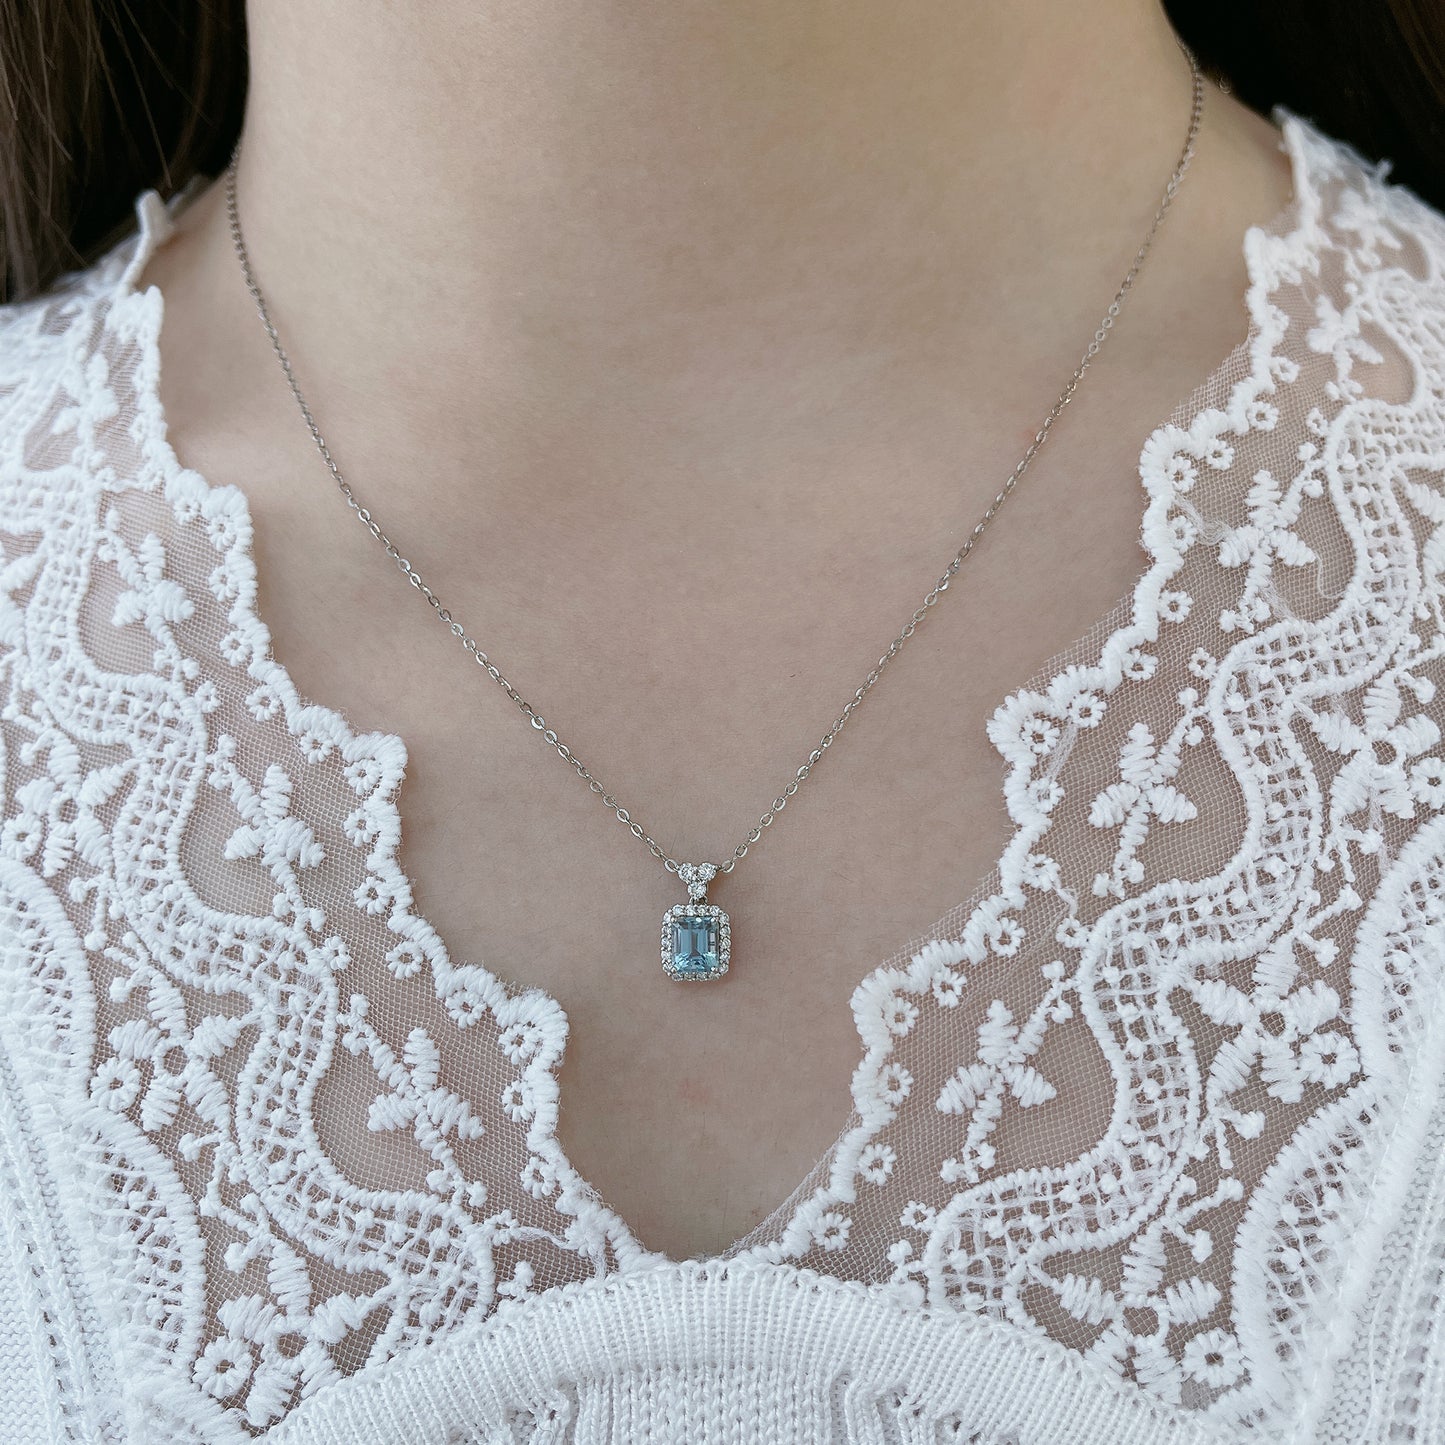 18k White Gold Aquamarine Diamond Necklace 18k白金鑽石海藍寶頸鍊